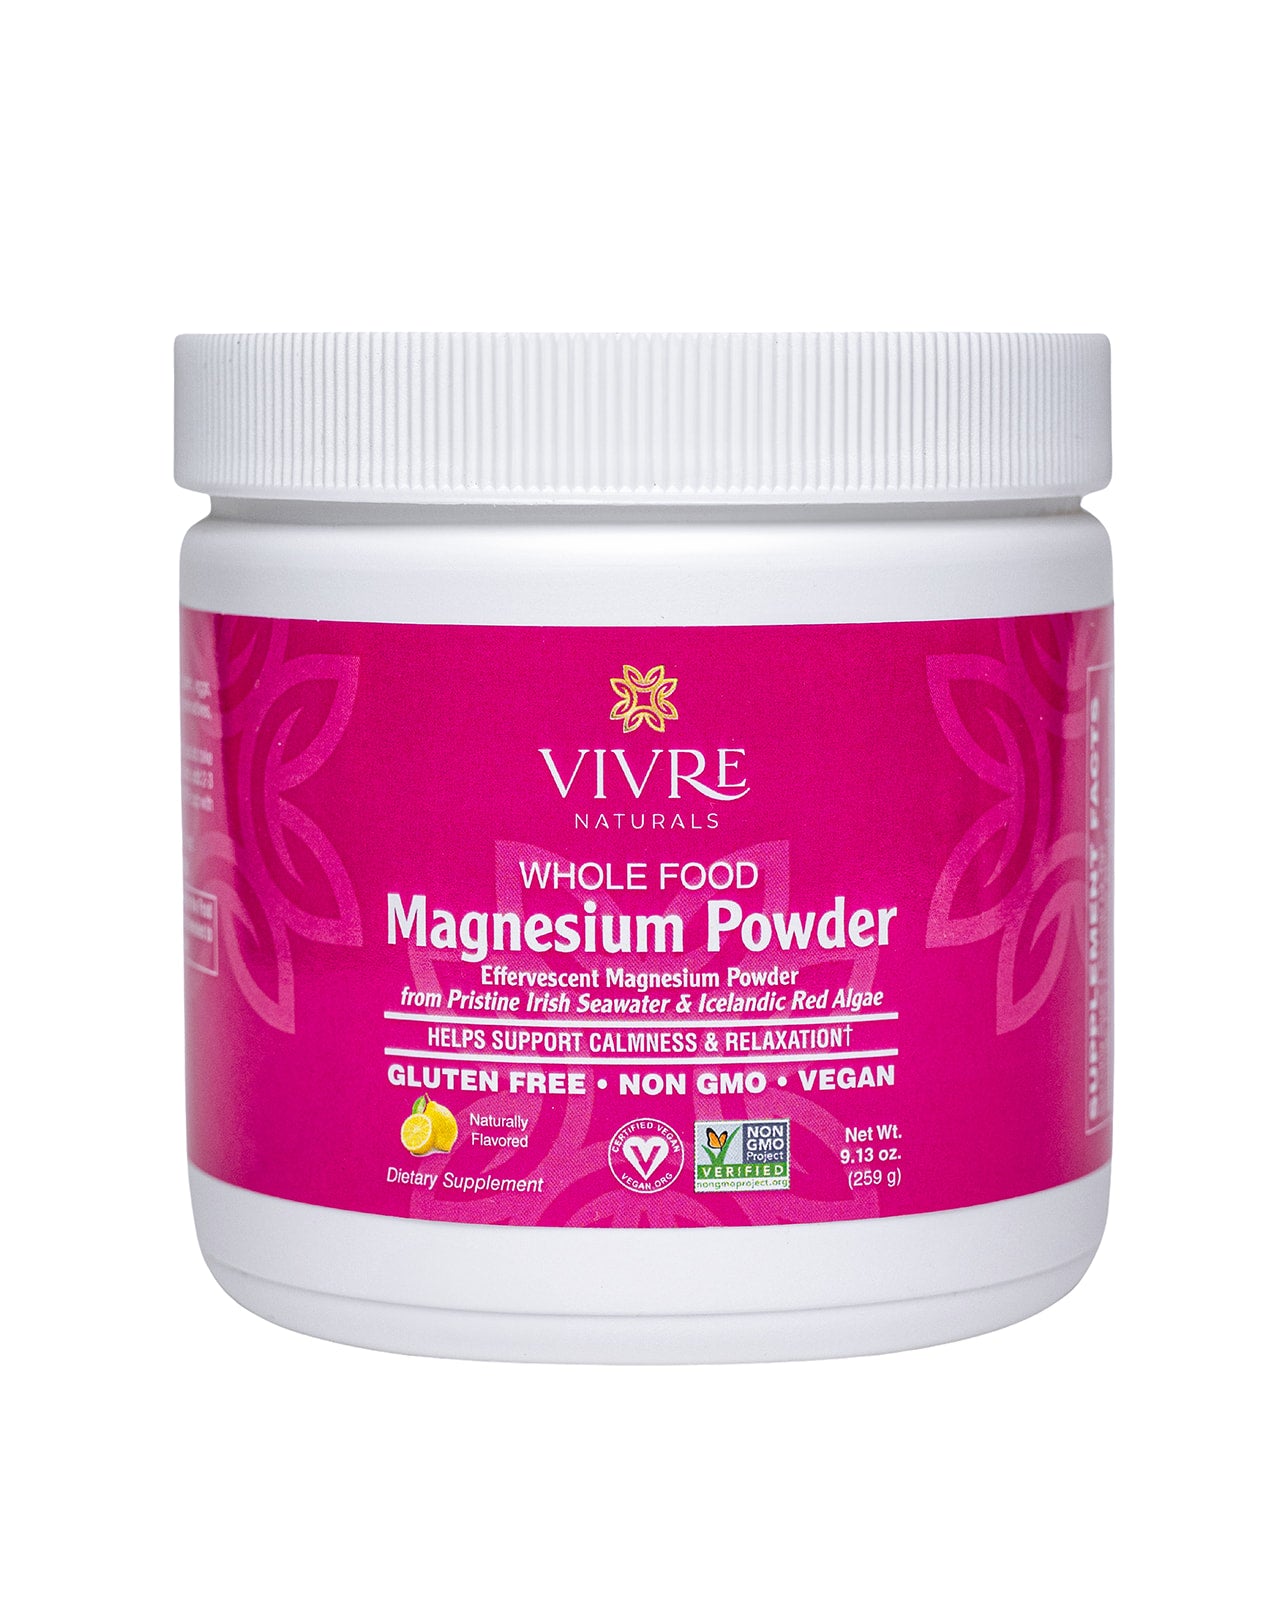 Whole Food Magnesium Powder